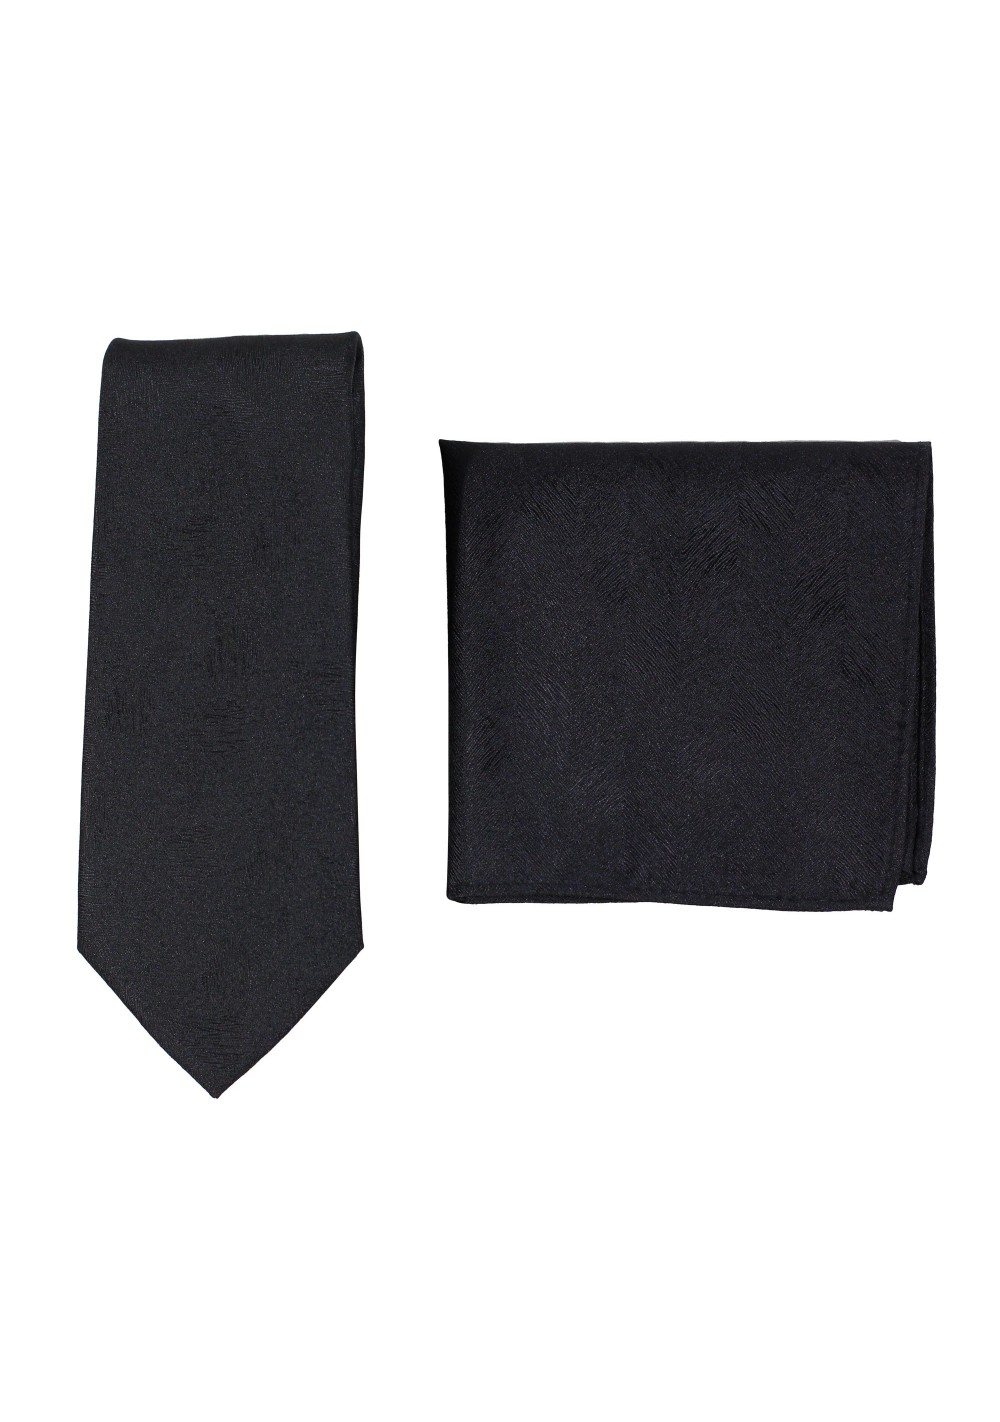 Woodgrain Texture Necktie Set in Jet Black